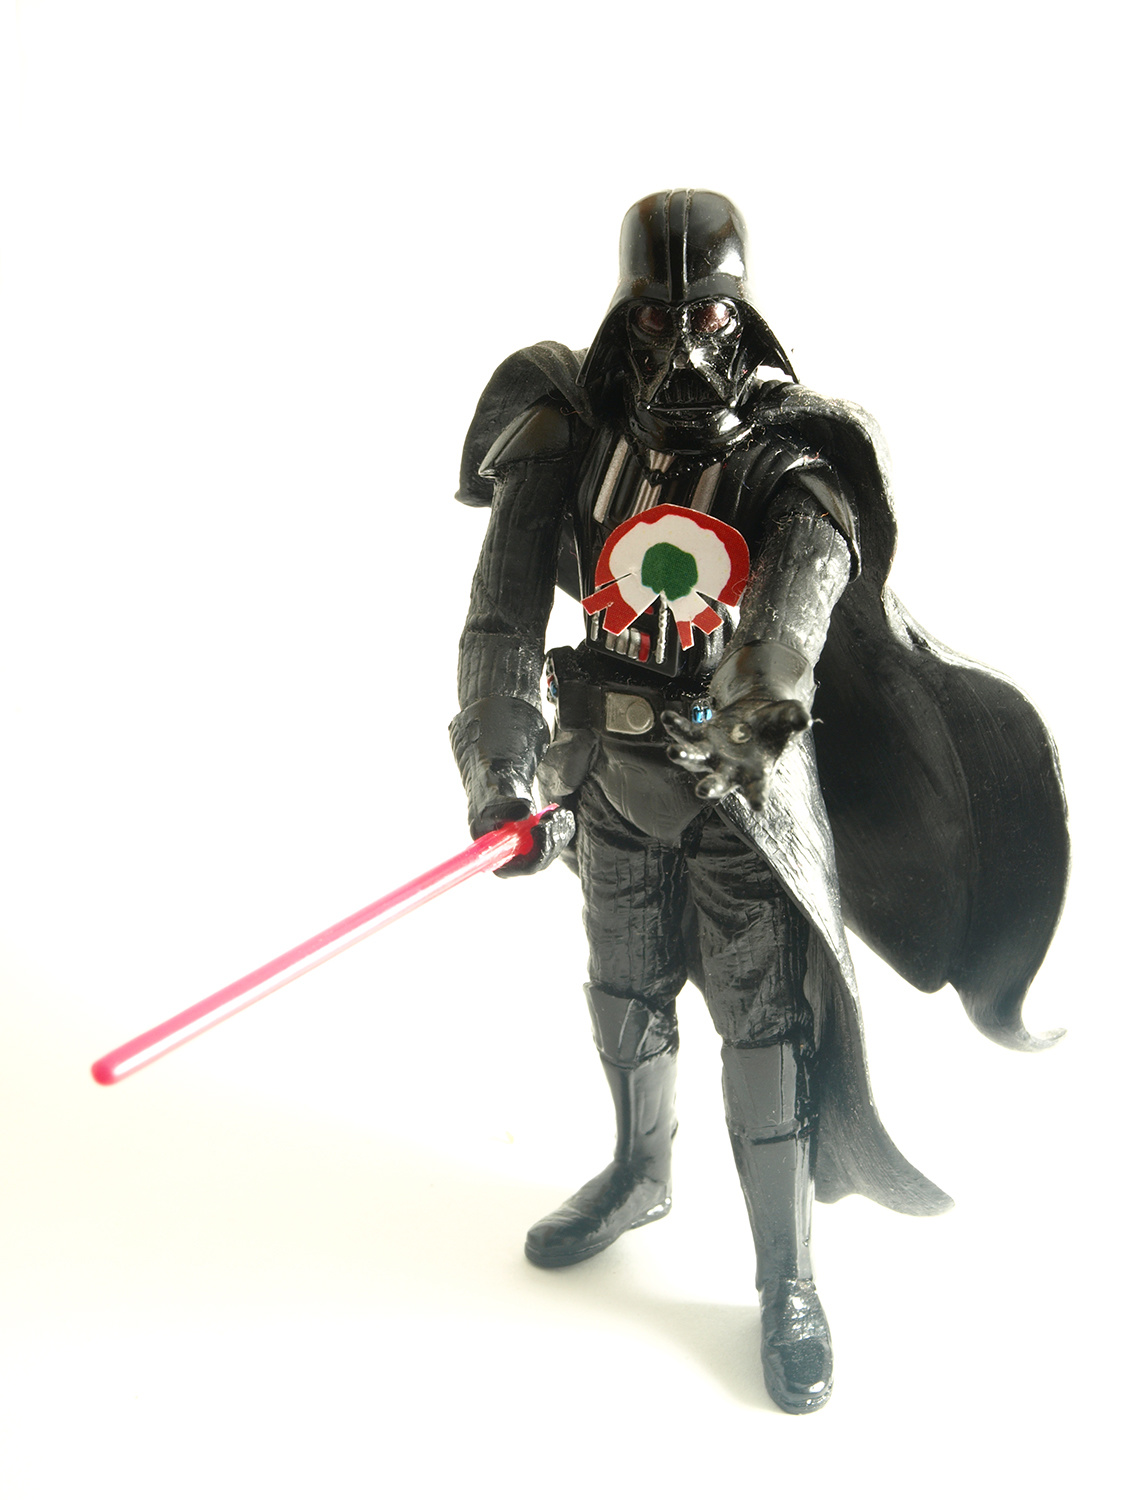 Darth Vader: Szavazzon rám!